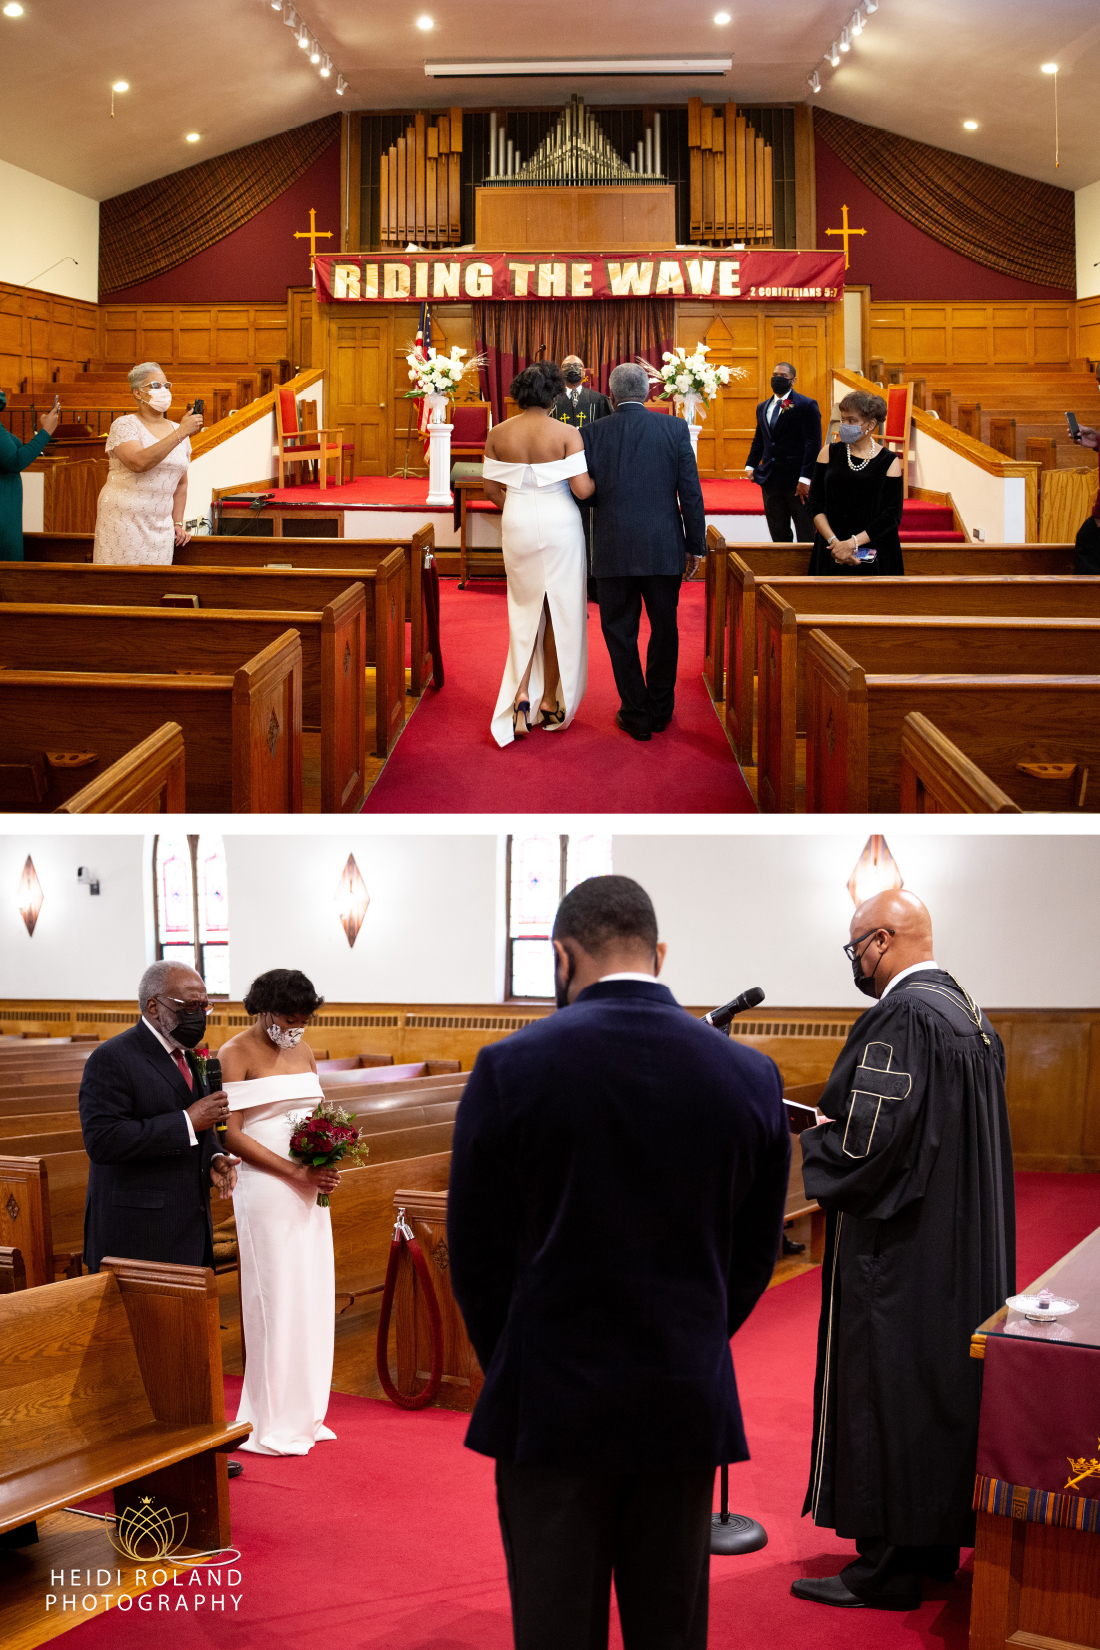 Small Philadelphia Enon Tabernacle Baptist Church Wedding Ceremony